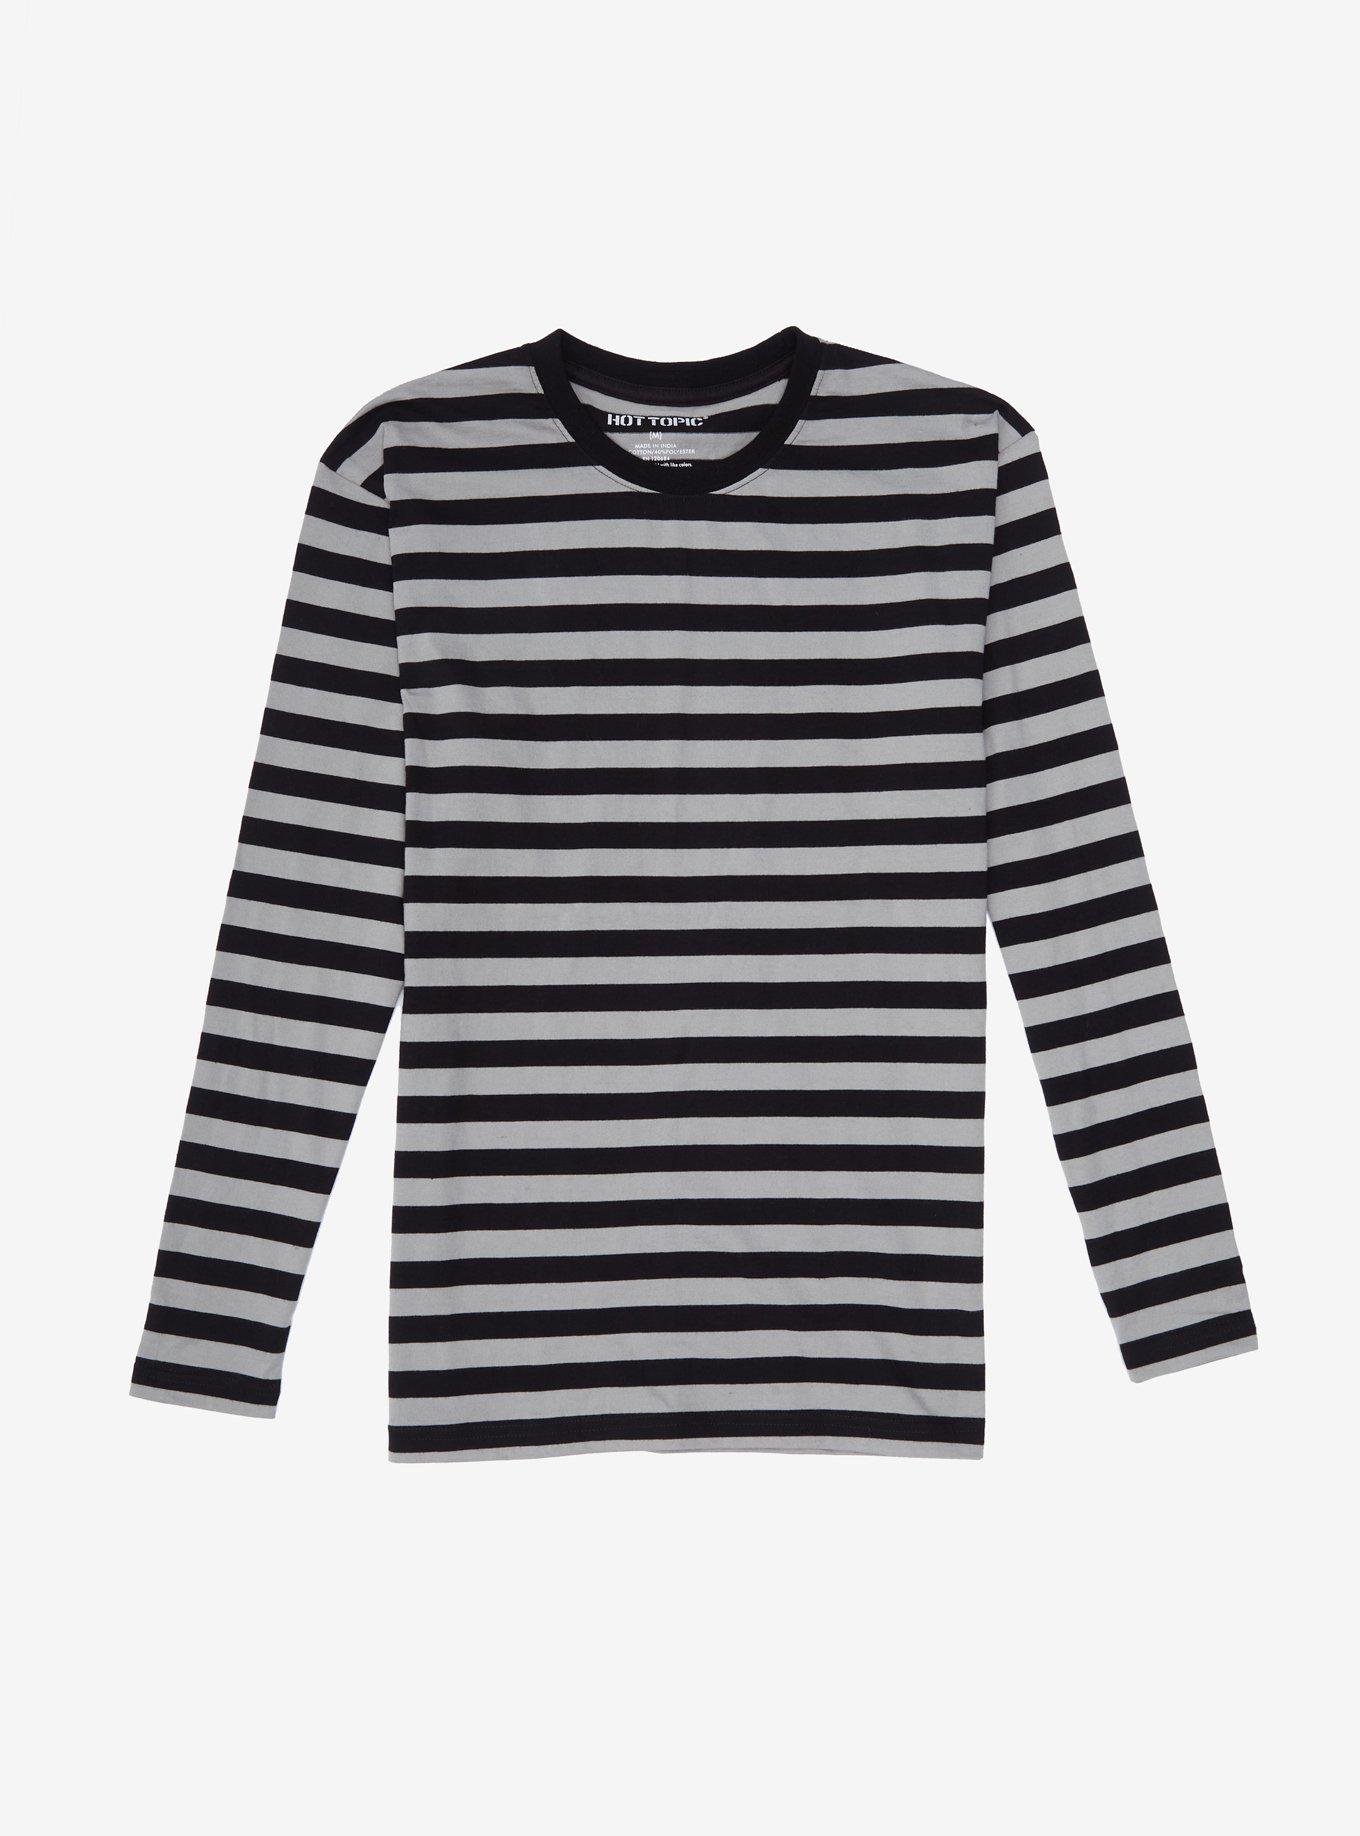 Grey & Black Stripe Long-Sleeve T-Shirt, STRIPE - GREY, hi-res